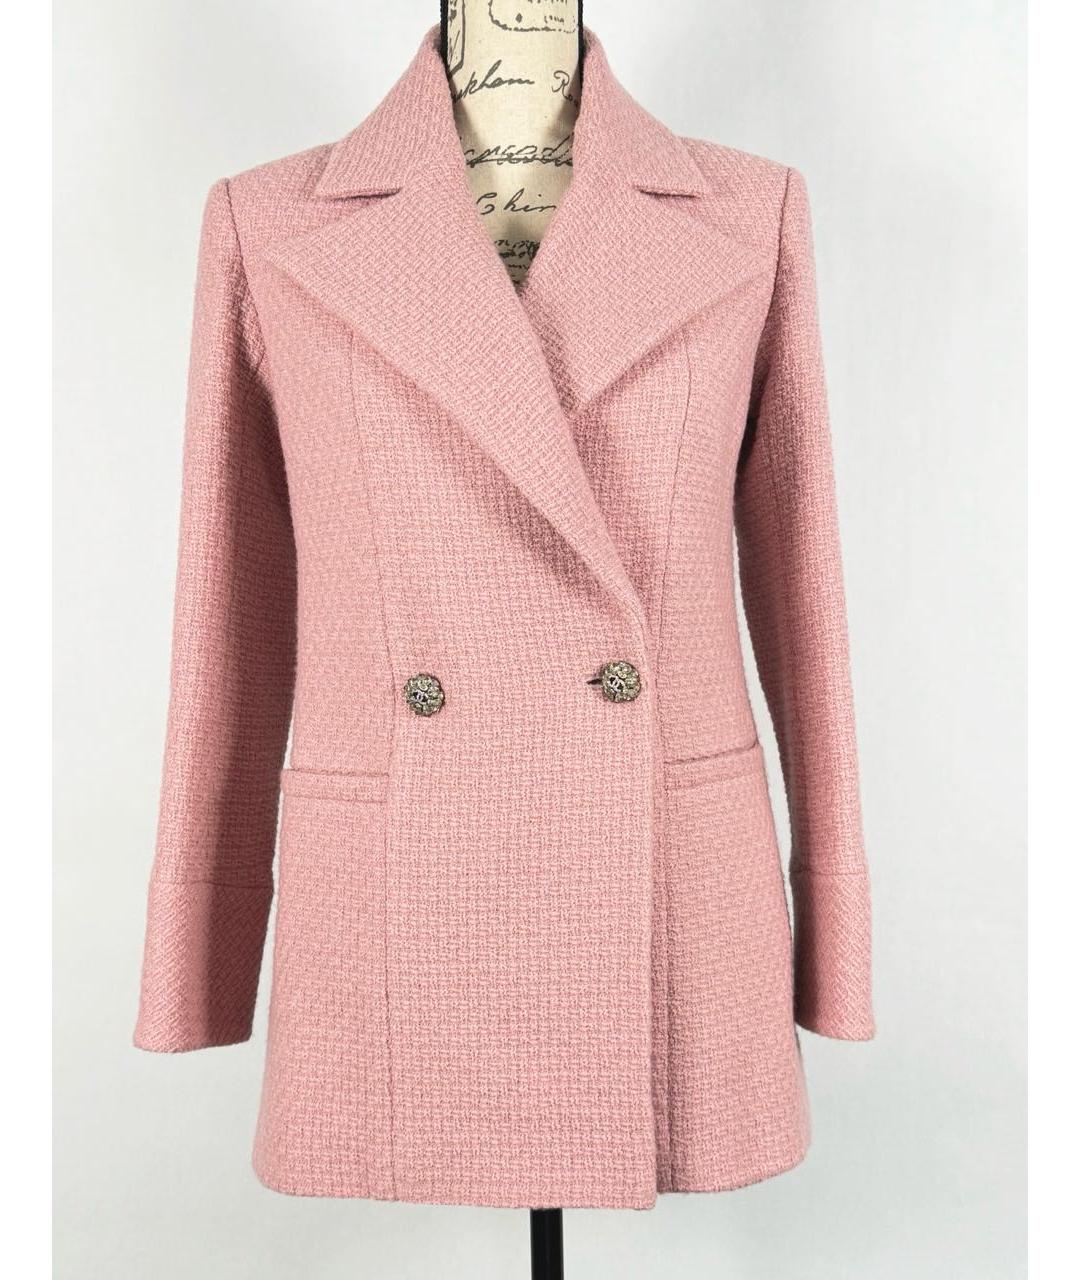 CHANEL PRE-OWNED Розовый твидовый жакет/пиджак, фото 3